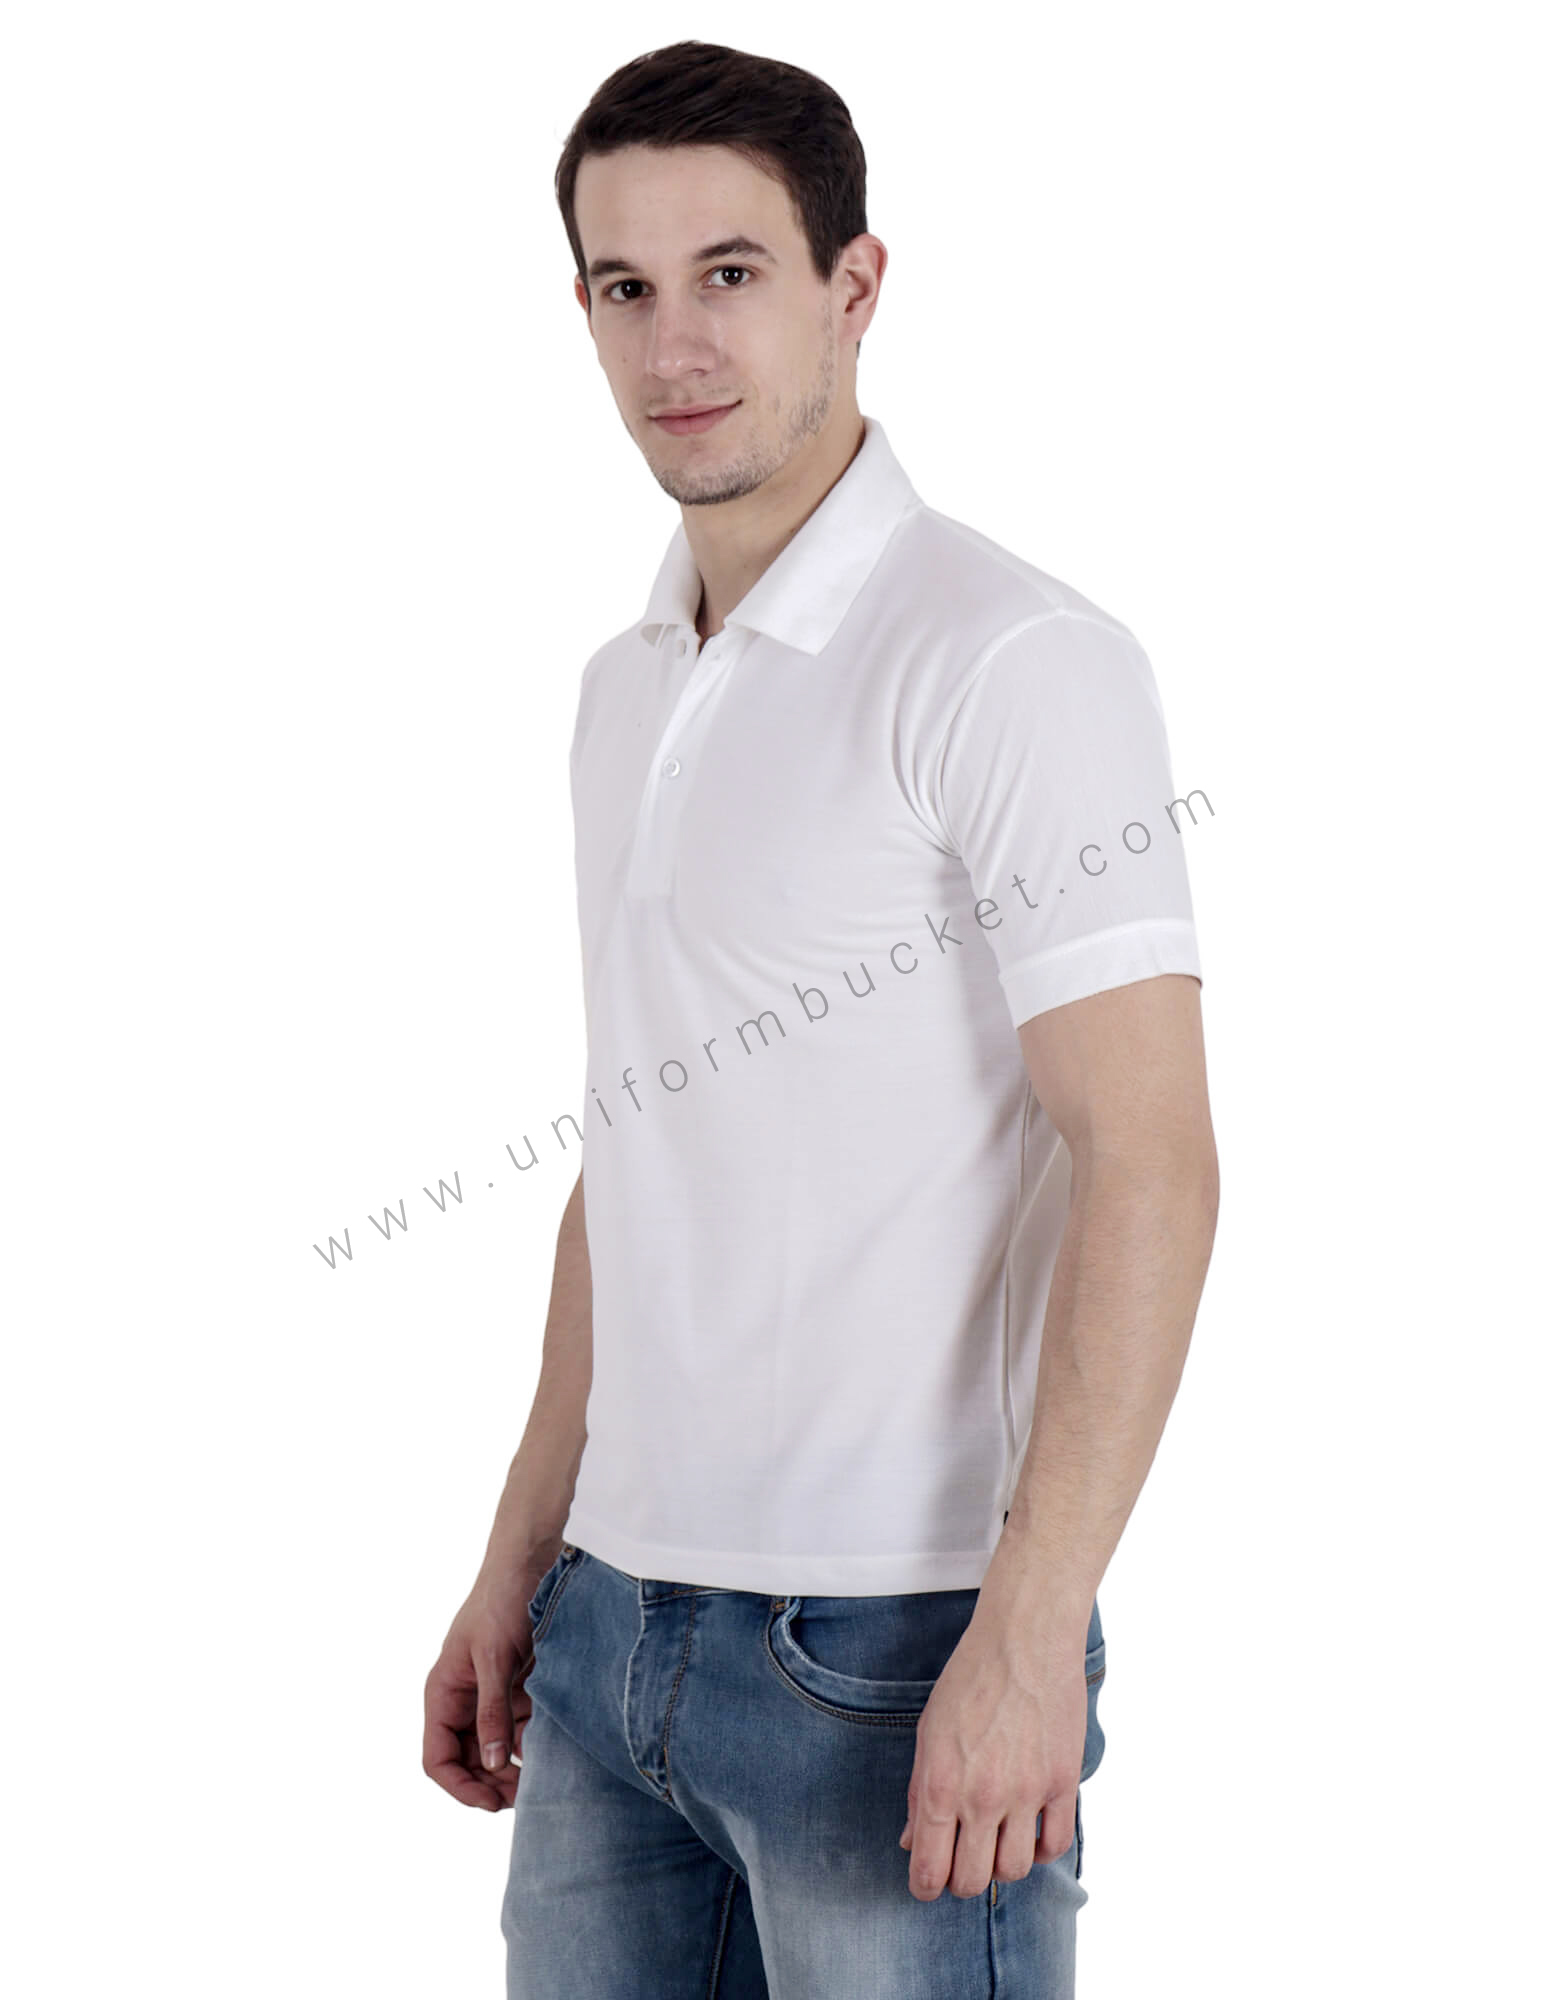 White Uniform Polo T- Shirt